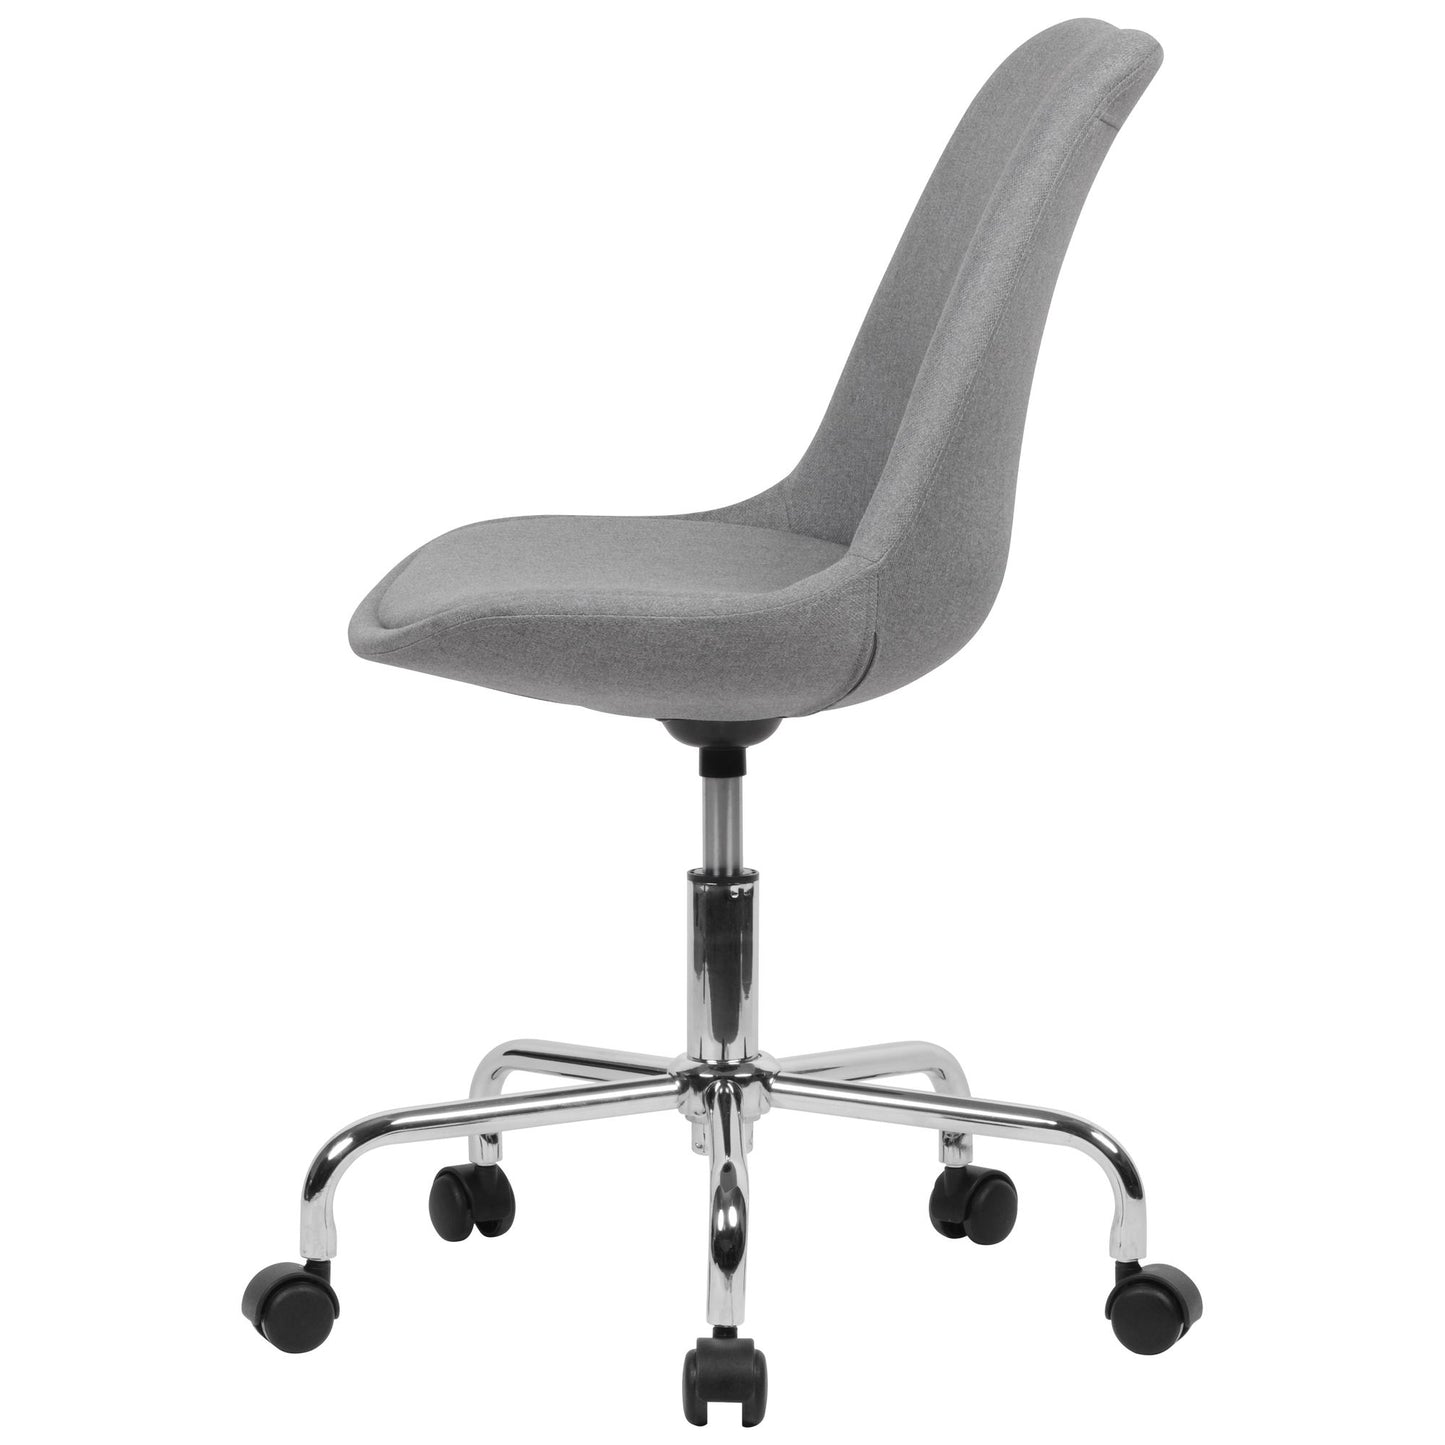 Nancy's Ecorse Office Chair - Swivel Bucket Chair - Swivel Chair - Fabric - Light Gray